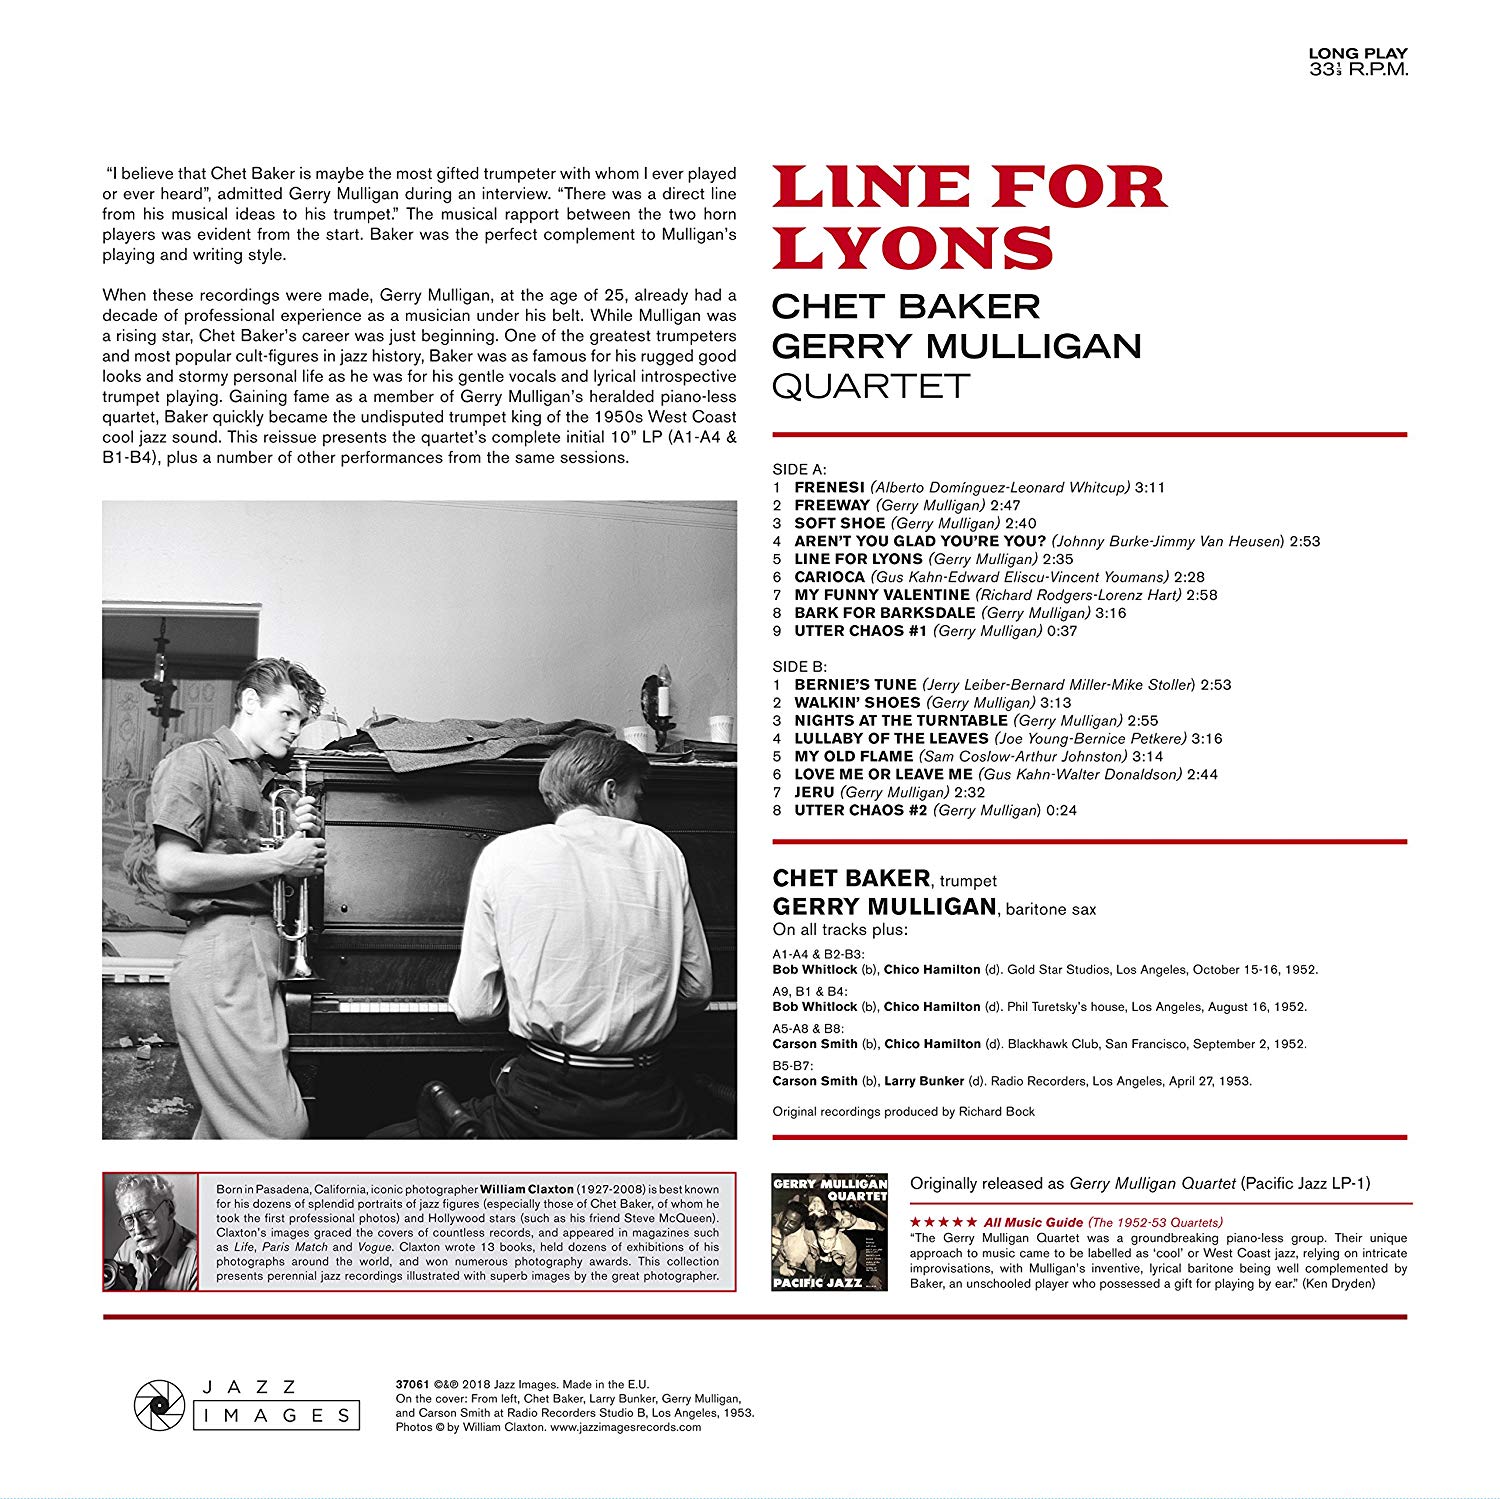 Chet Baker & Gerry Mulligan (쳇 베이커 & 제리 멀리건) - Line for Lyons [LP]